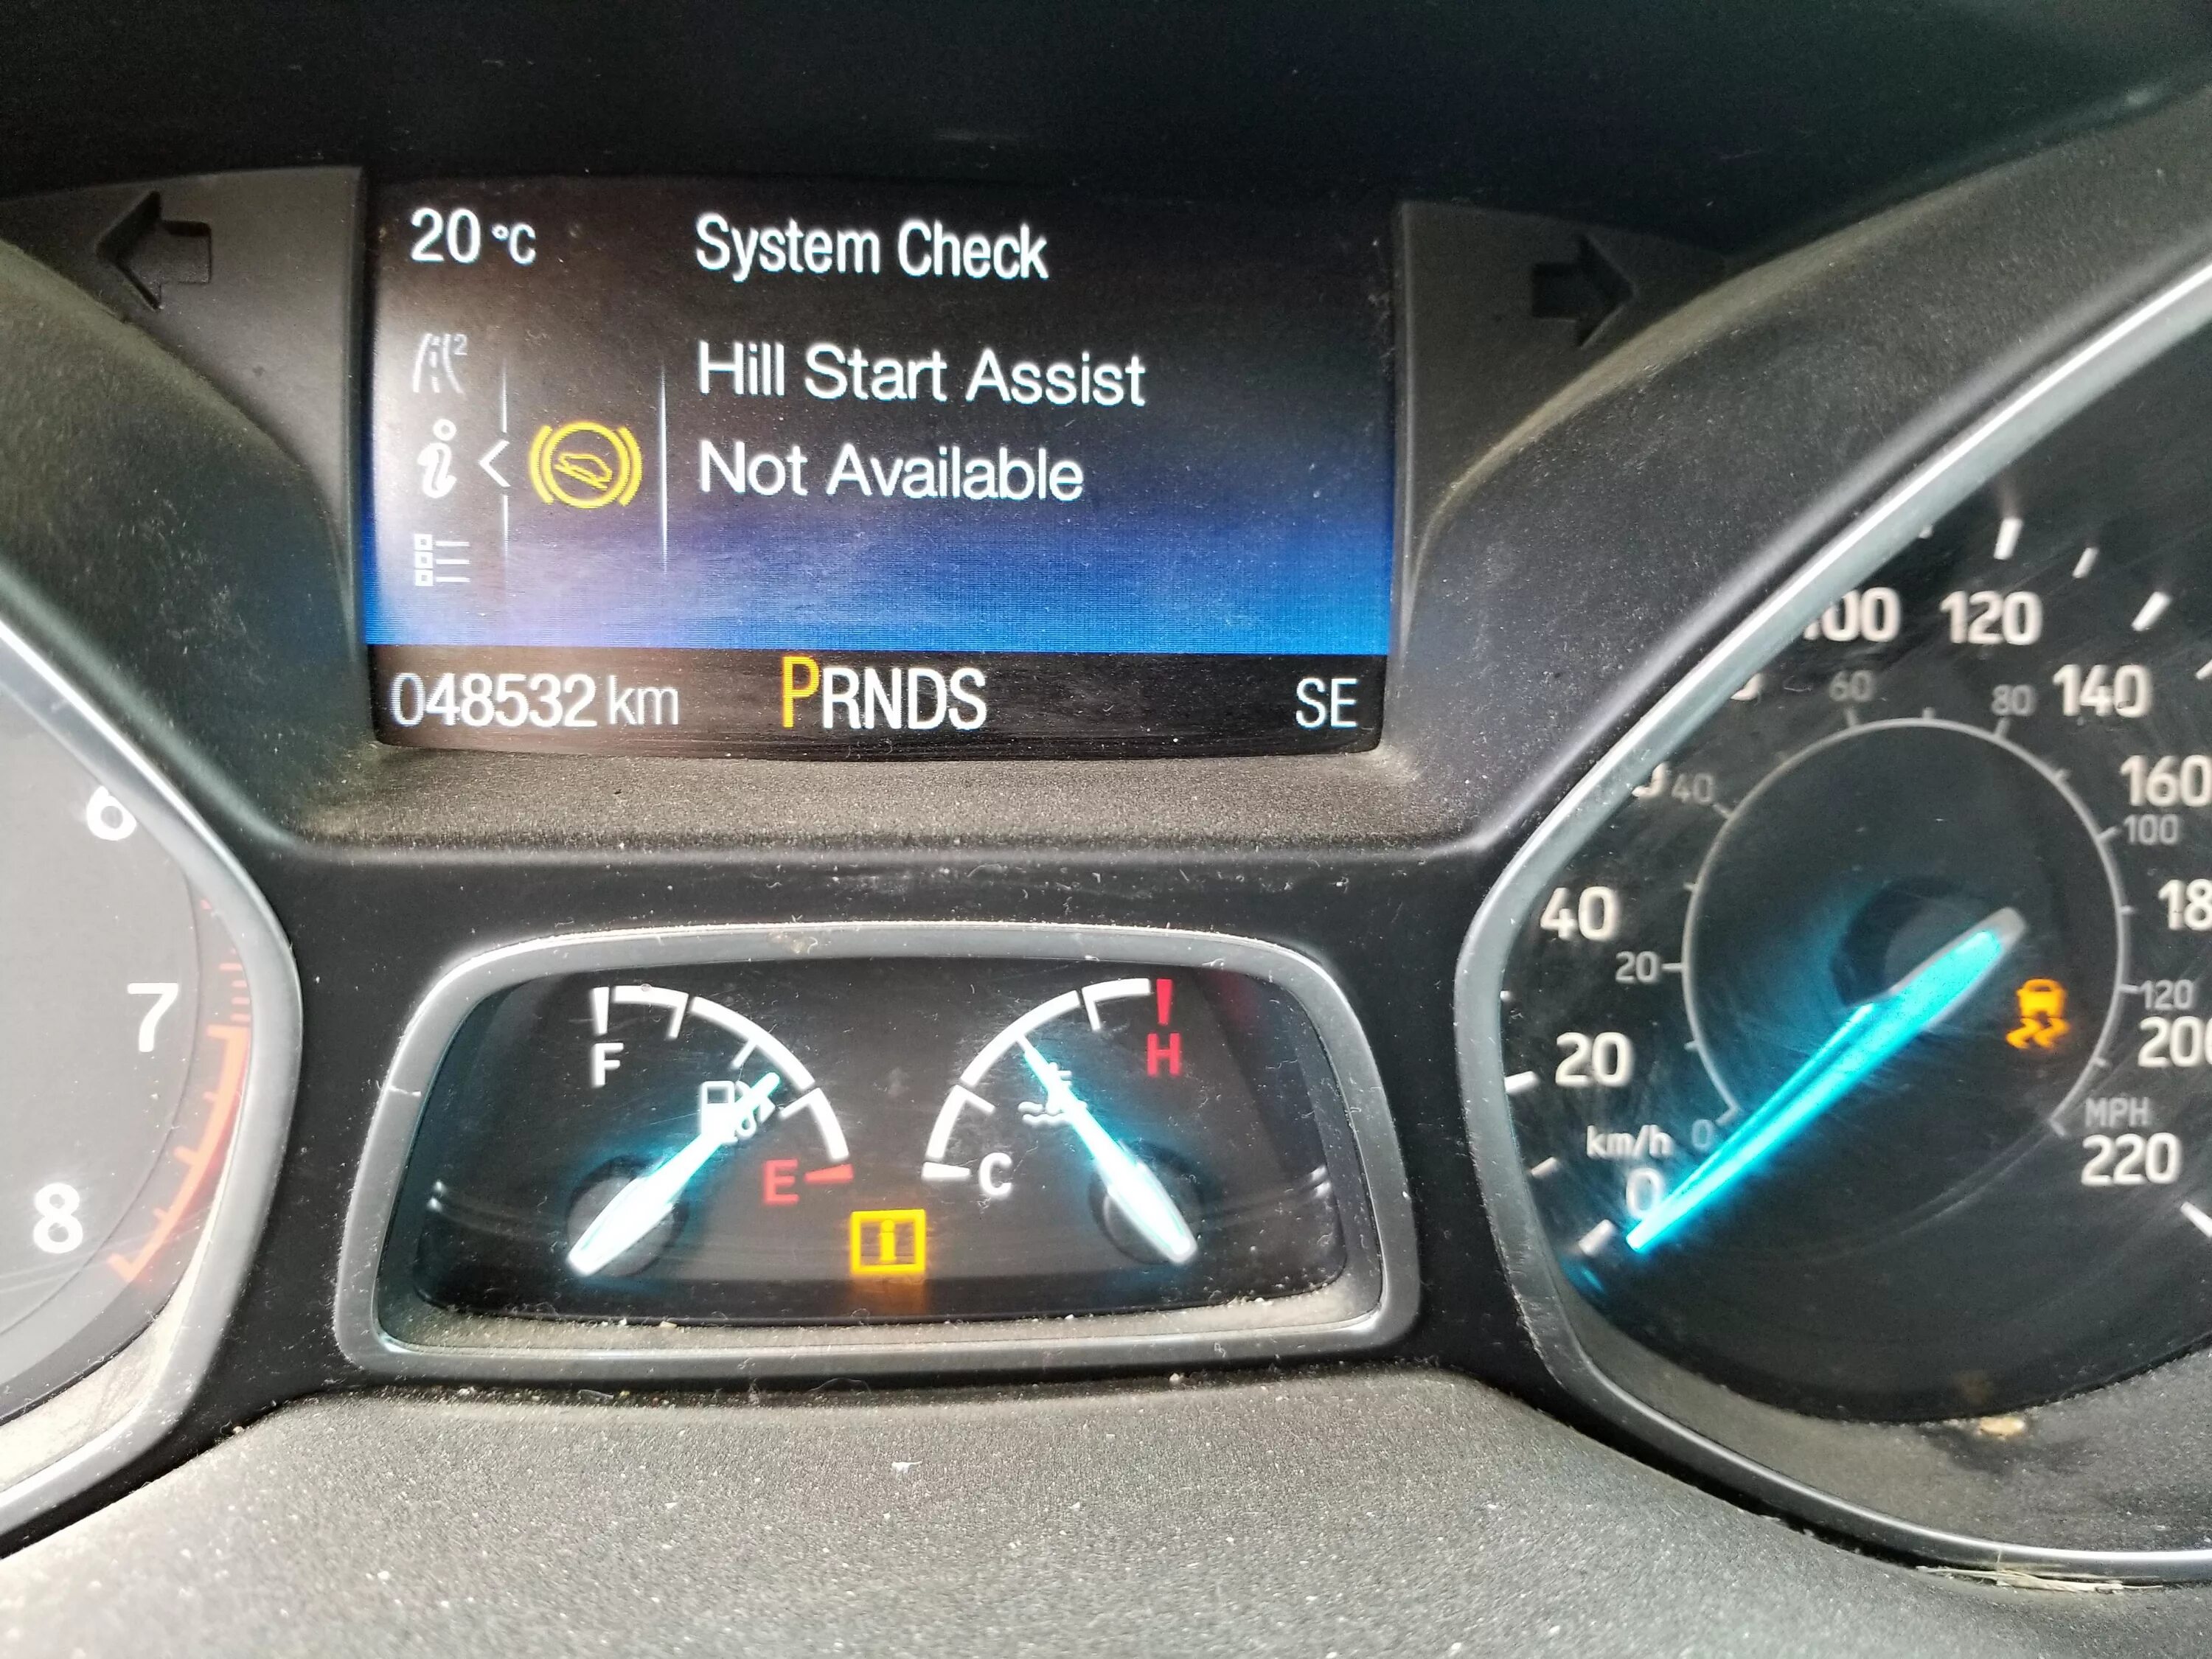 Форд Эскейп 3 Кан шина. Hill start Assistant Ford Transit 2017. Hill start assist Ford Focus. Ford Escape 2018 самотестирование приборов. Start assistant